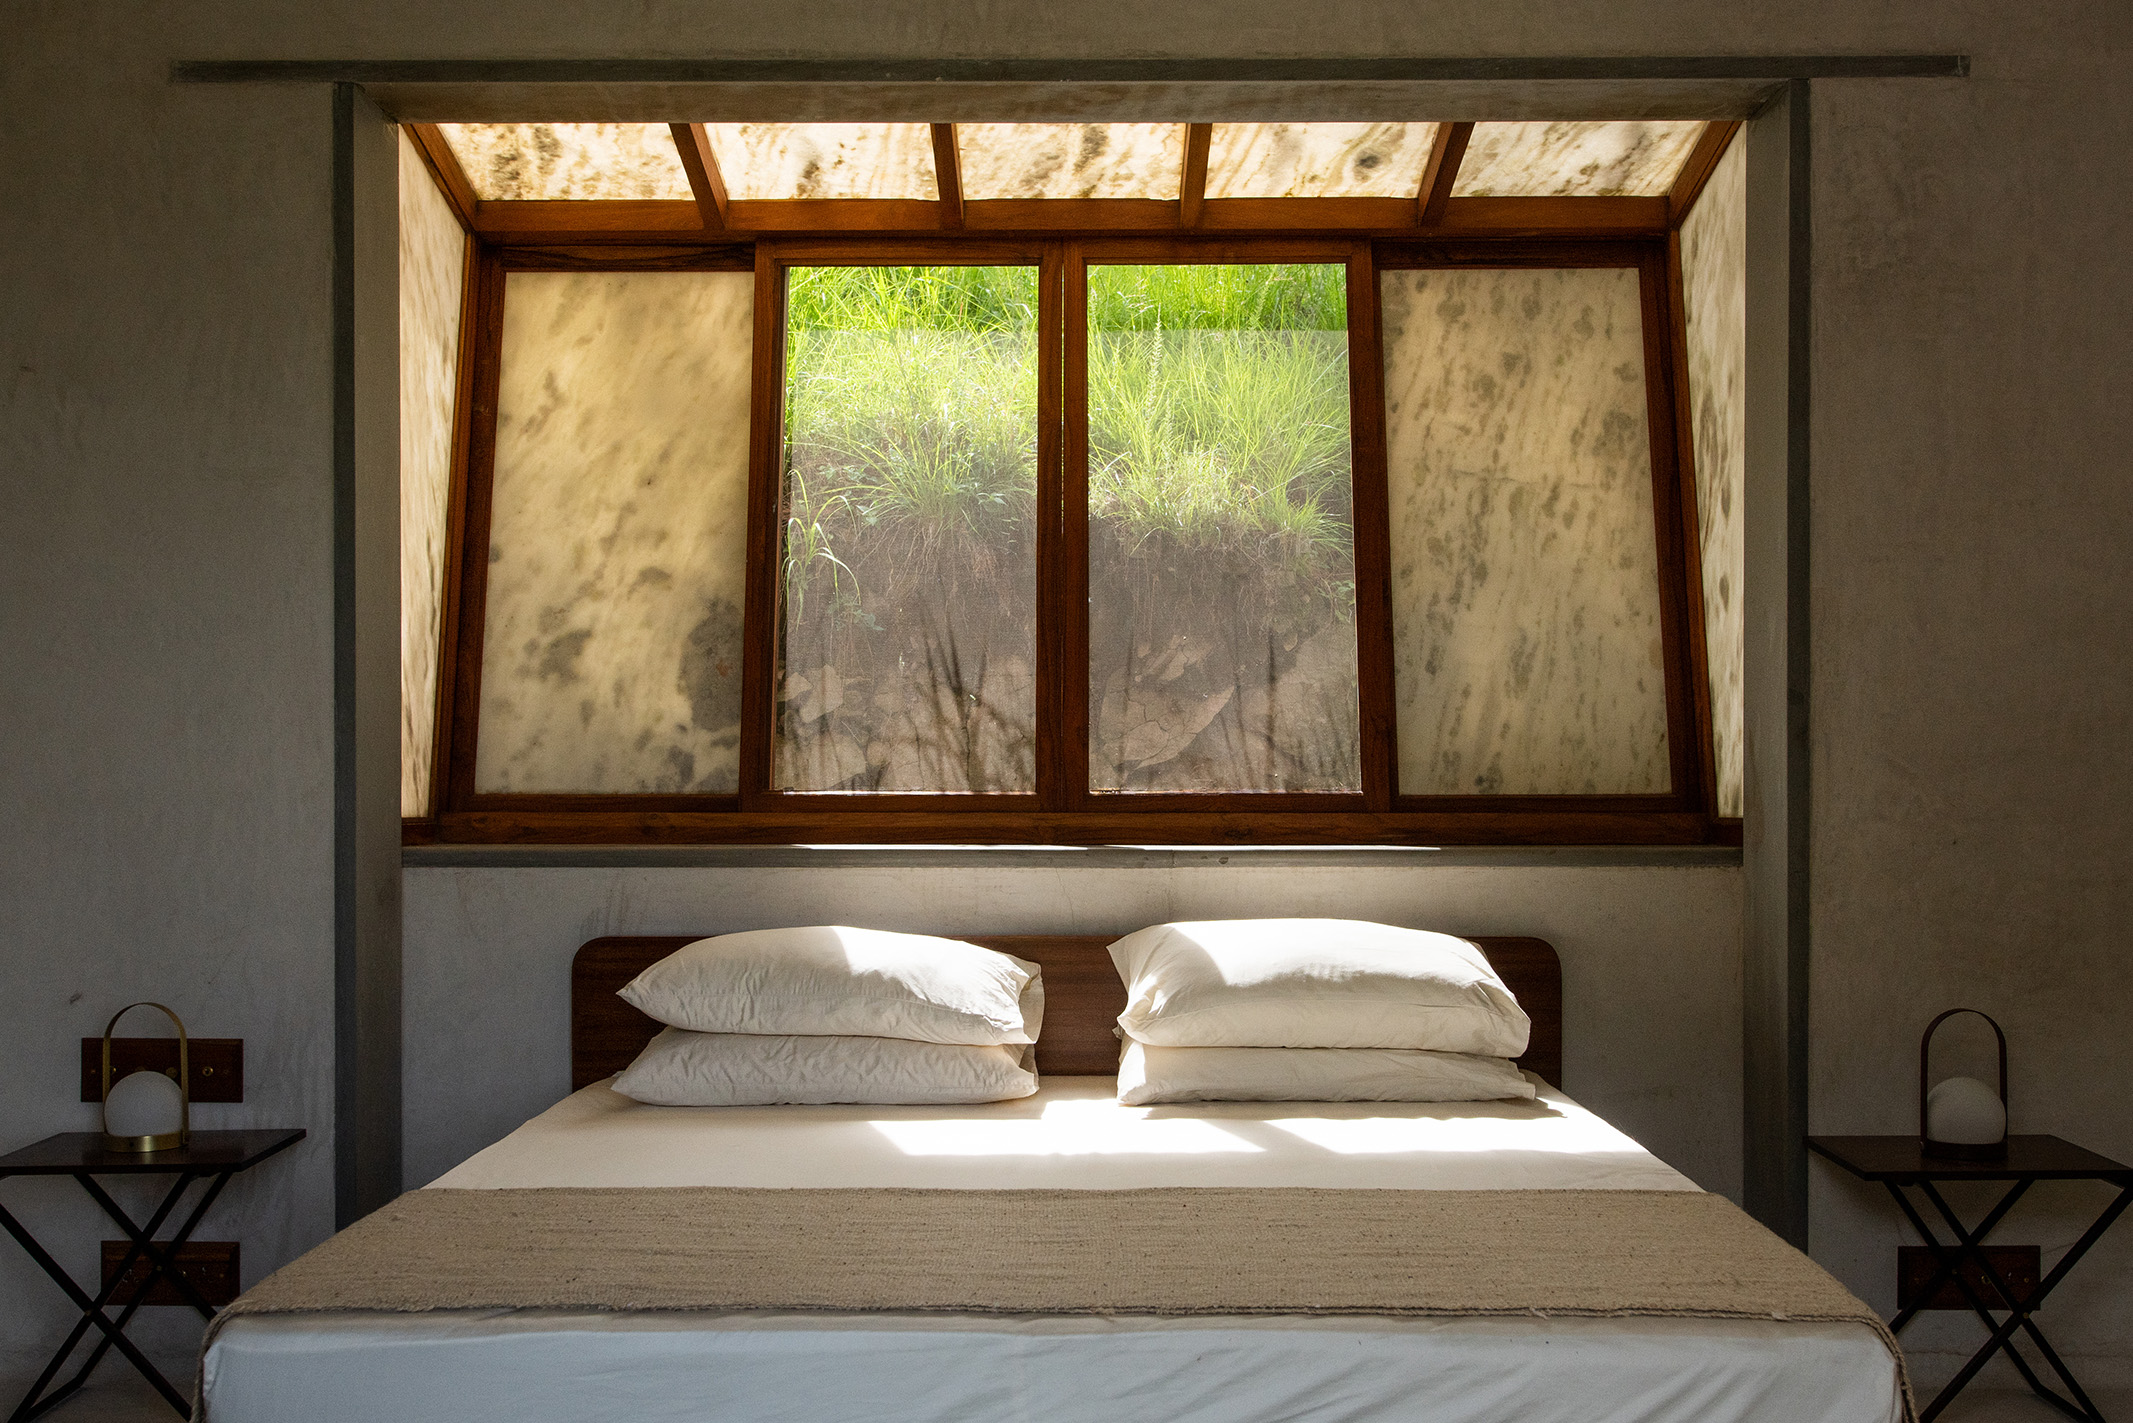 Bijoy Jain Marries Sustainable Architecture With Thoughtful Luxury At This Hillside Retreat In Kasauli - Design Pataki